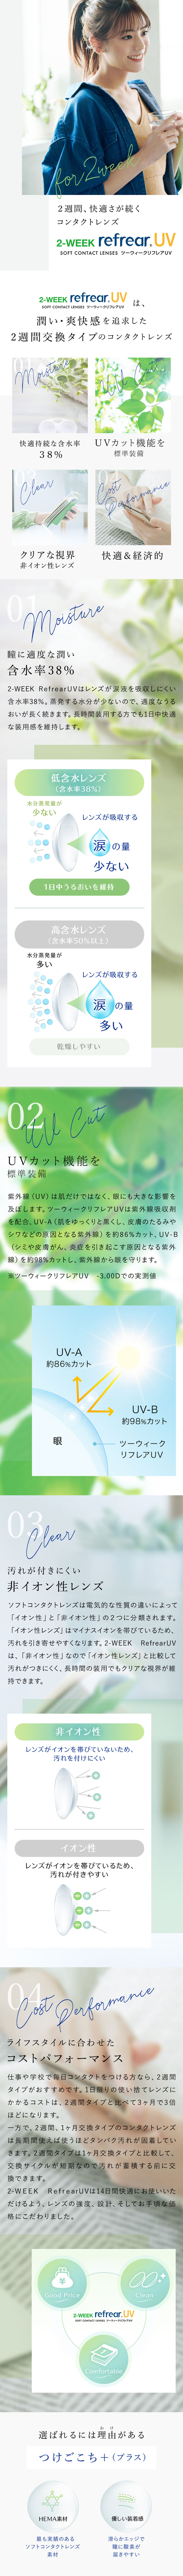 2week refrear UV リフレア あす楽 クリア コンタクトレンズ 2週間 1箱6枚入り【-0.50から-10.00】  ＳＡＫＵＬＡＢＯ 